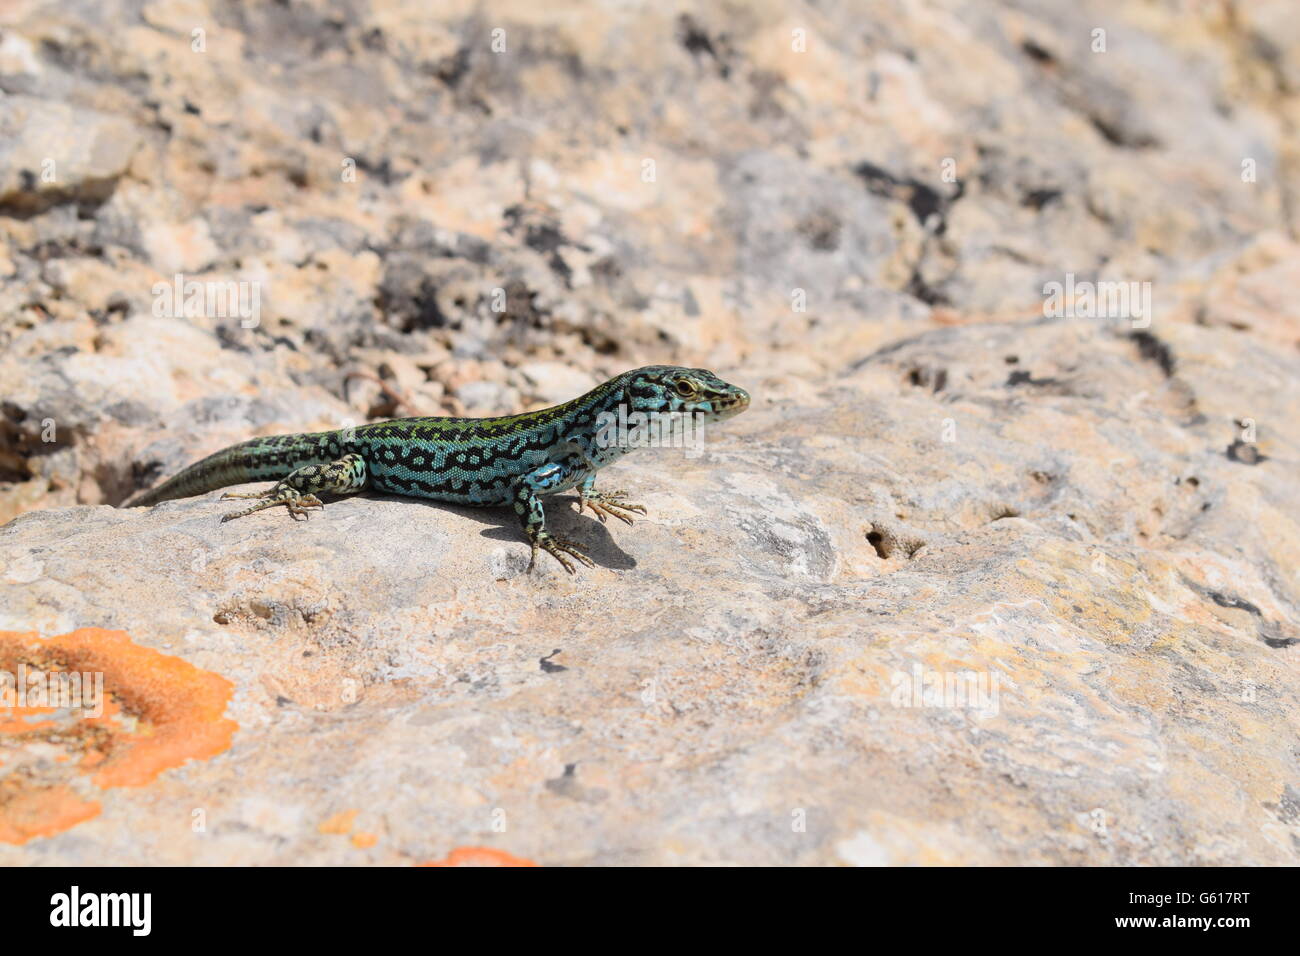 Podarcis Pityusensis Formenterae lizard resting on stone Stock Photo